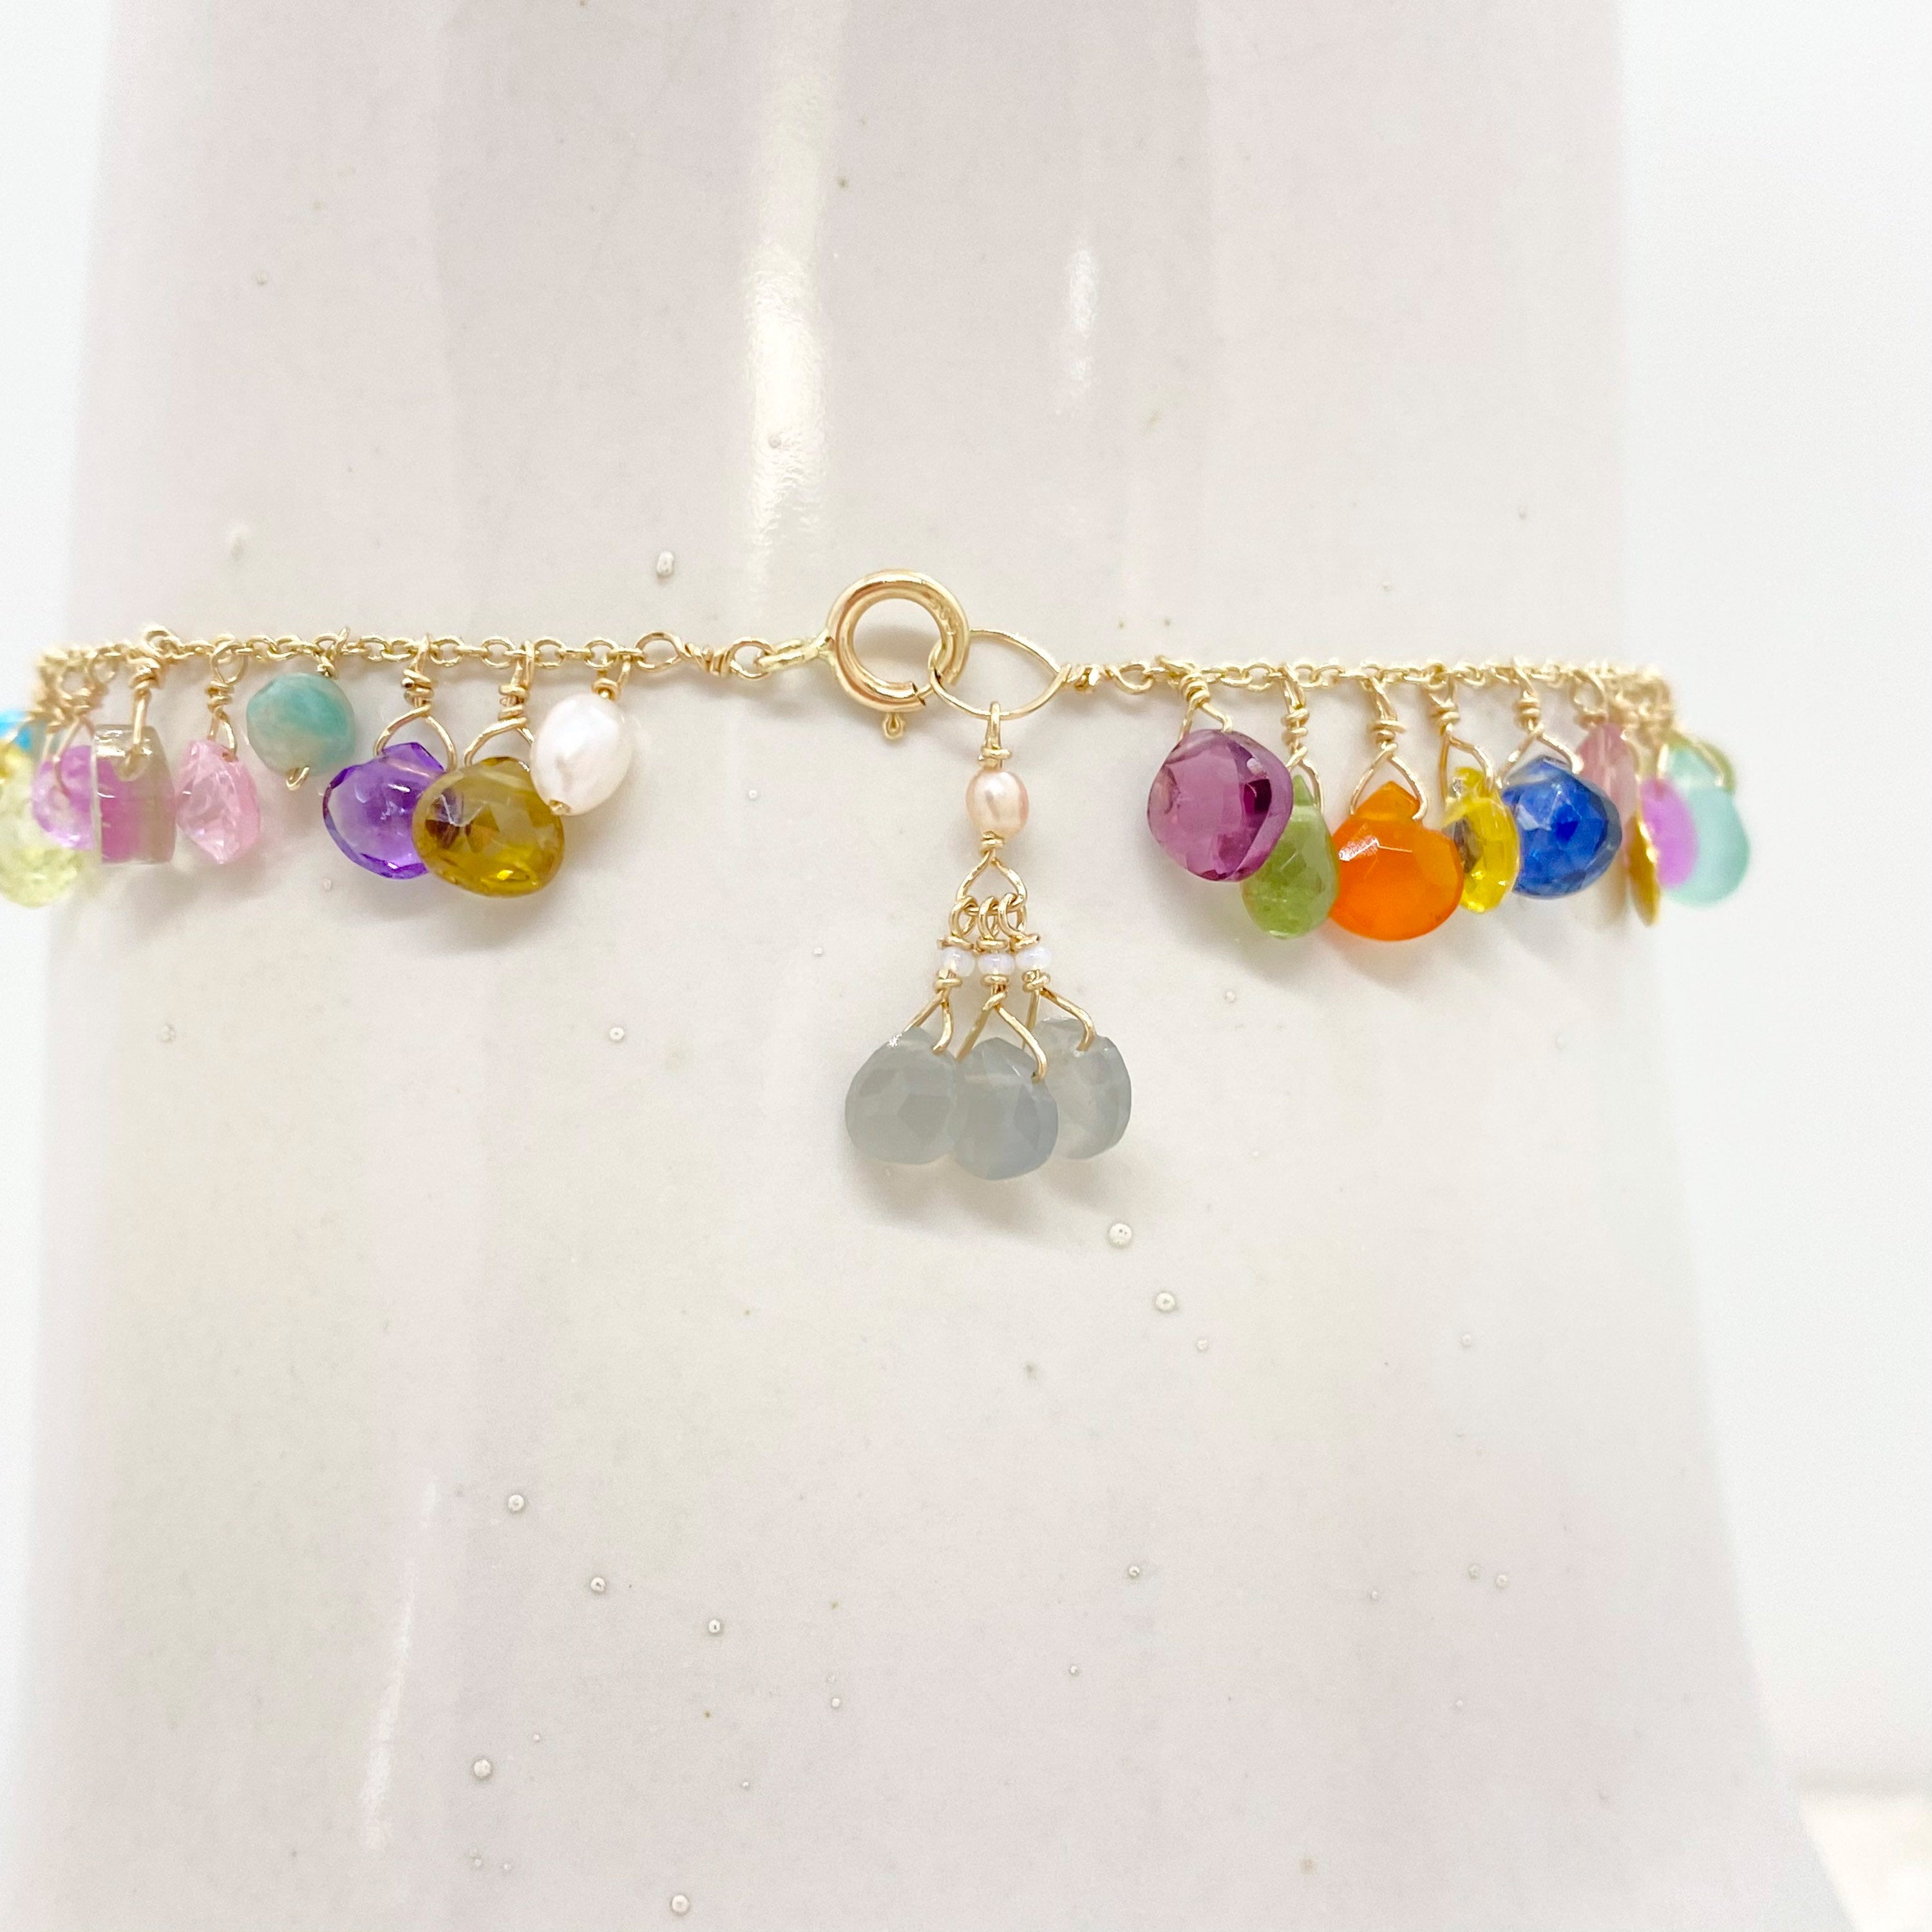 14k Gold Chain Bracelet w/ 18k Gold Pendants, Precious Stones, Semi-Precious Stones & Antique Italian Beads